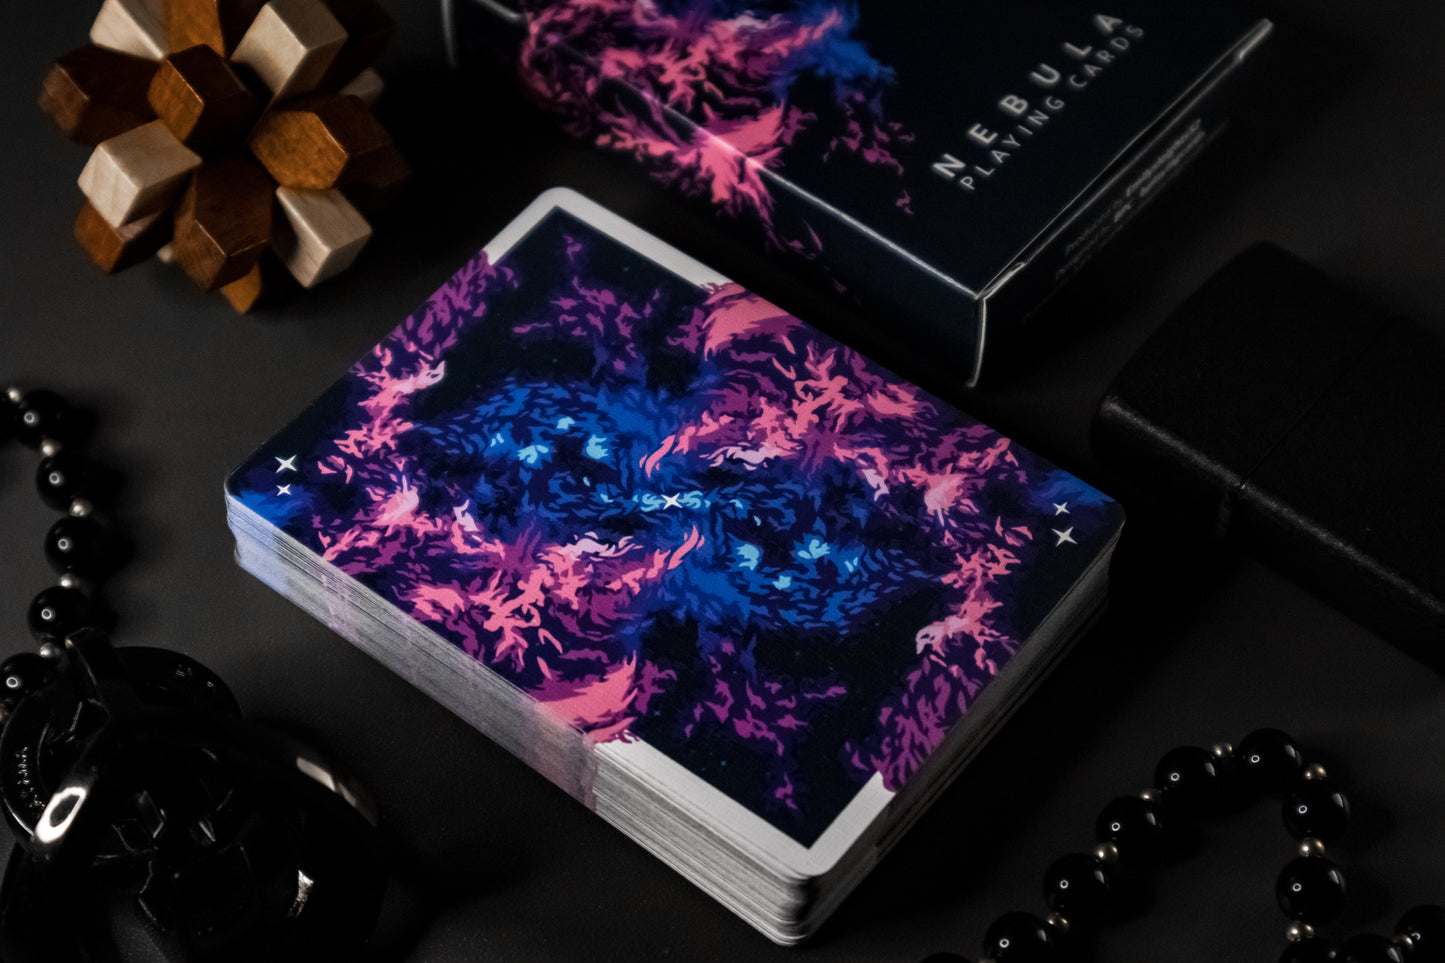 Nebula Playing Cards V1